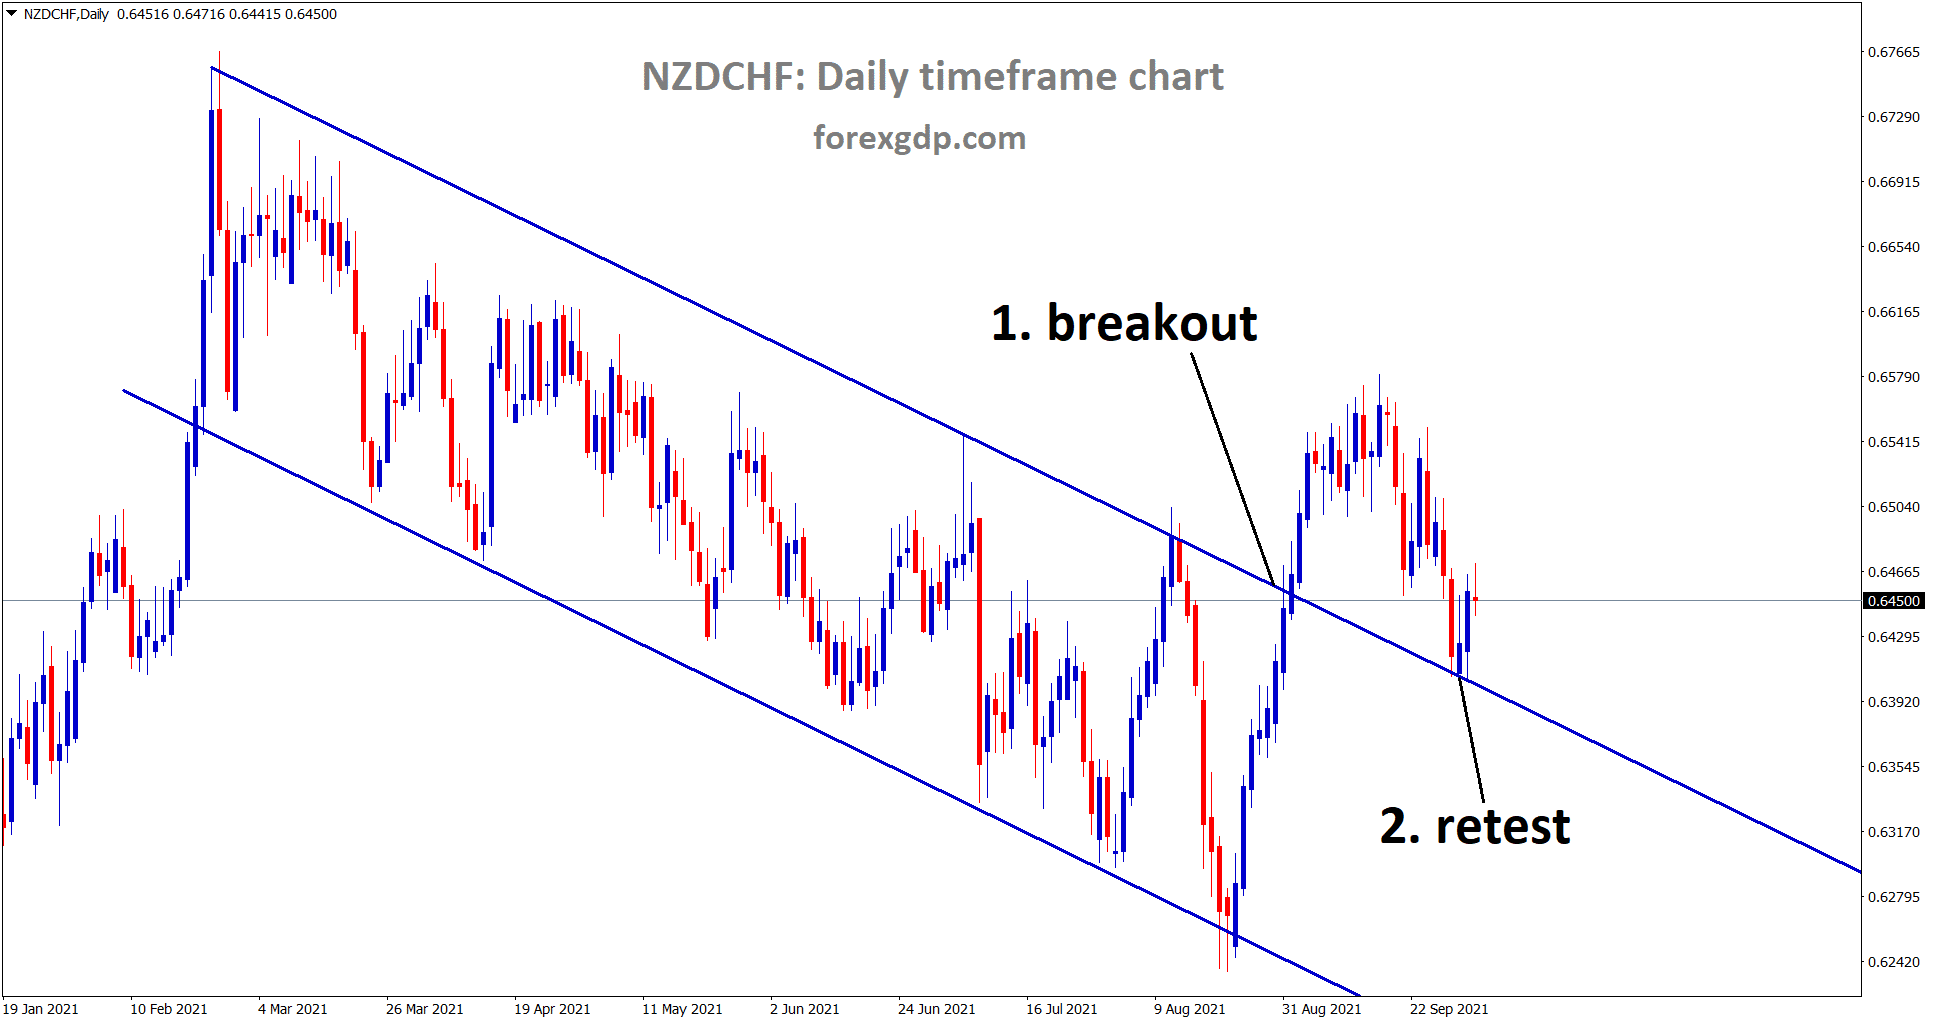 NZDCHF rebounded after retesting the broken descending channel